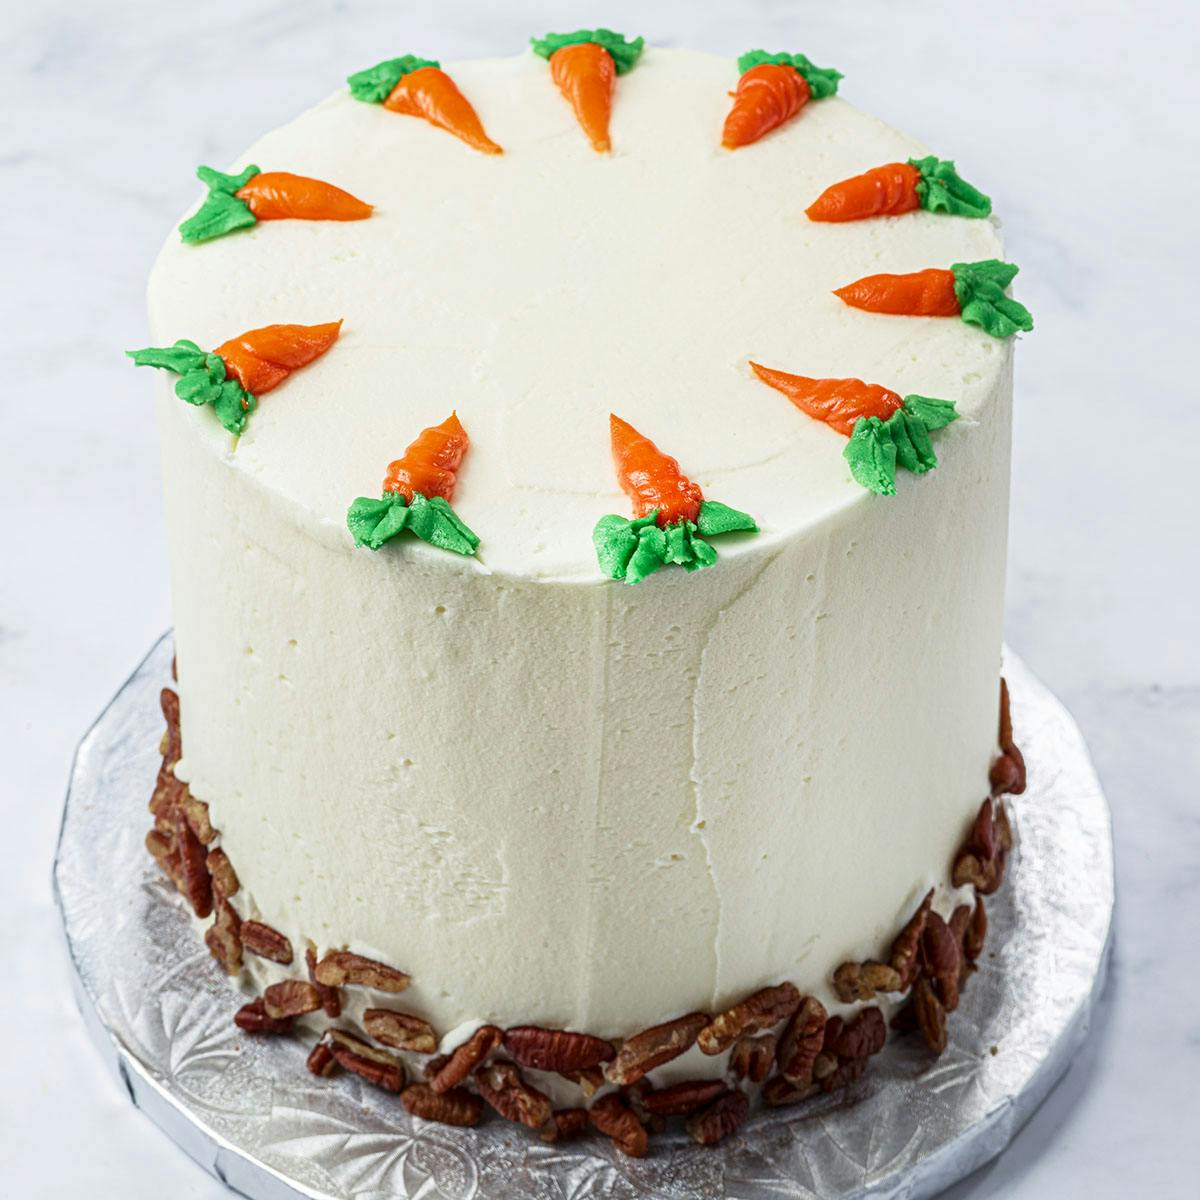 Baker Behind Award-Winning Vegan Carrot Cake Shares Her Recipe After 16  Years With VegNews Readers | VegNews